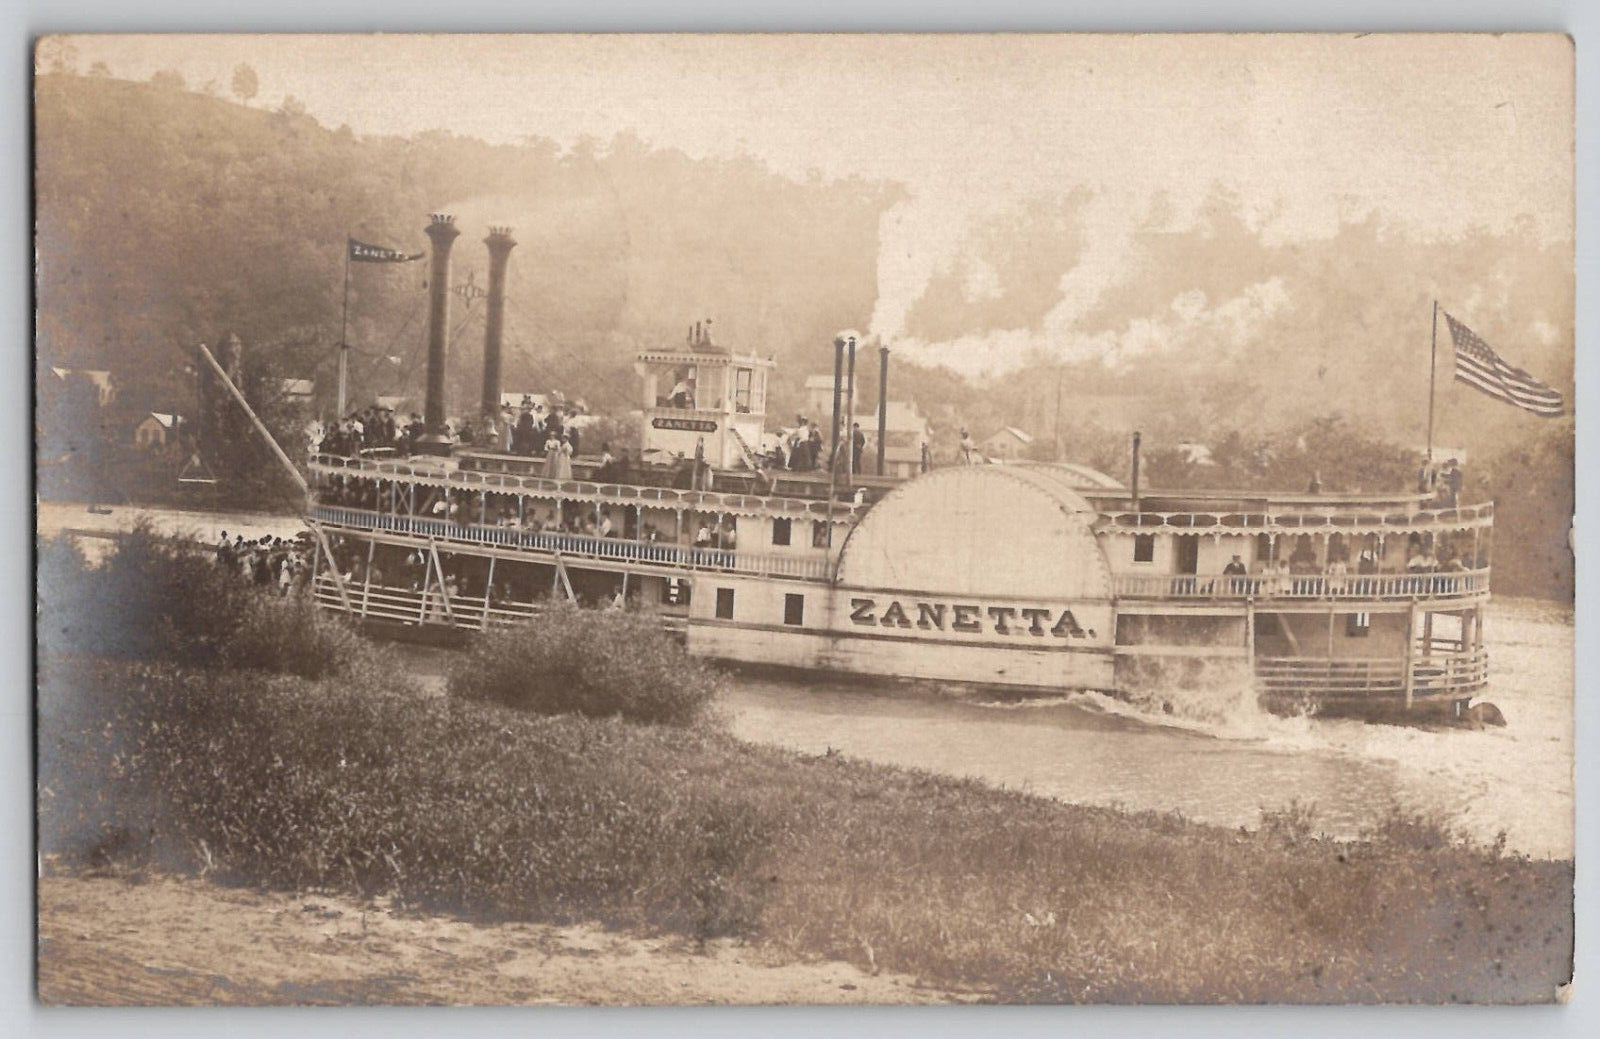 ZANETTA Steamer Steamship Malta OH, Muskingum River Ohio RPPC Photo Postcard